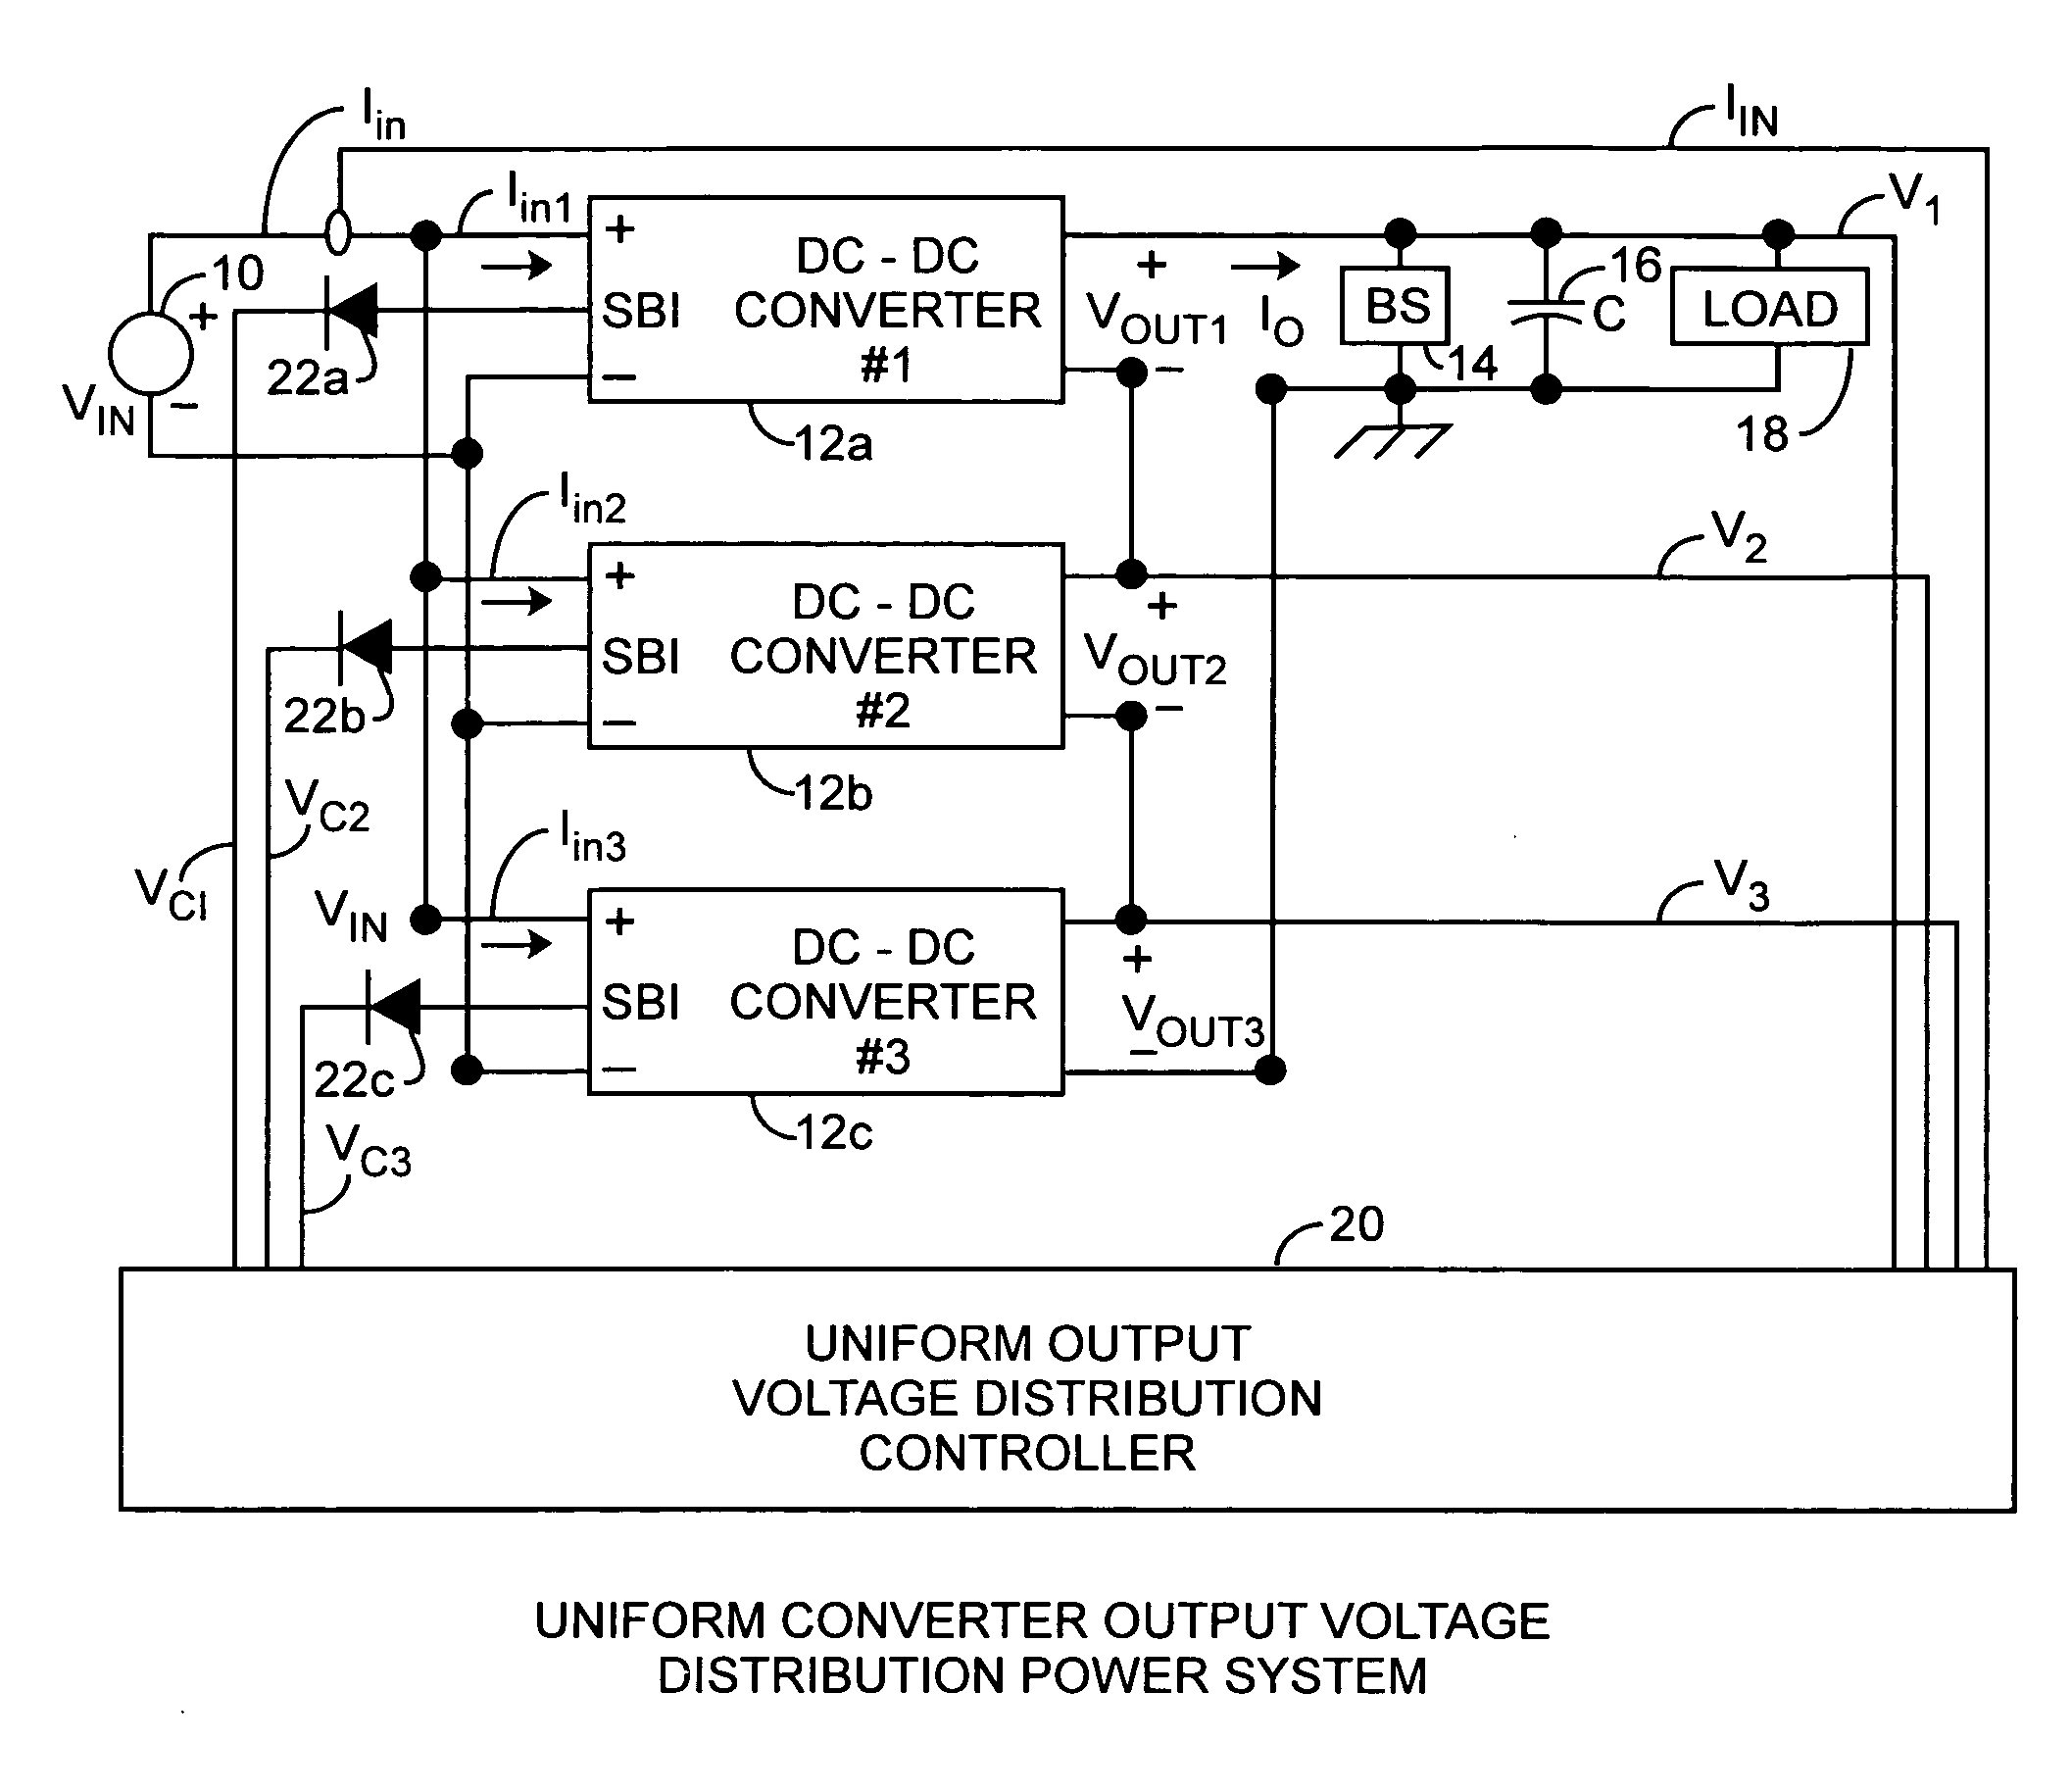 Uniform converter output voltage distribution power system